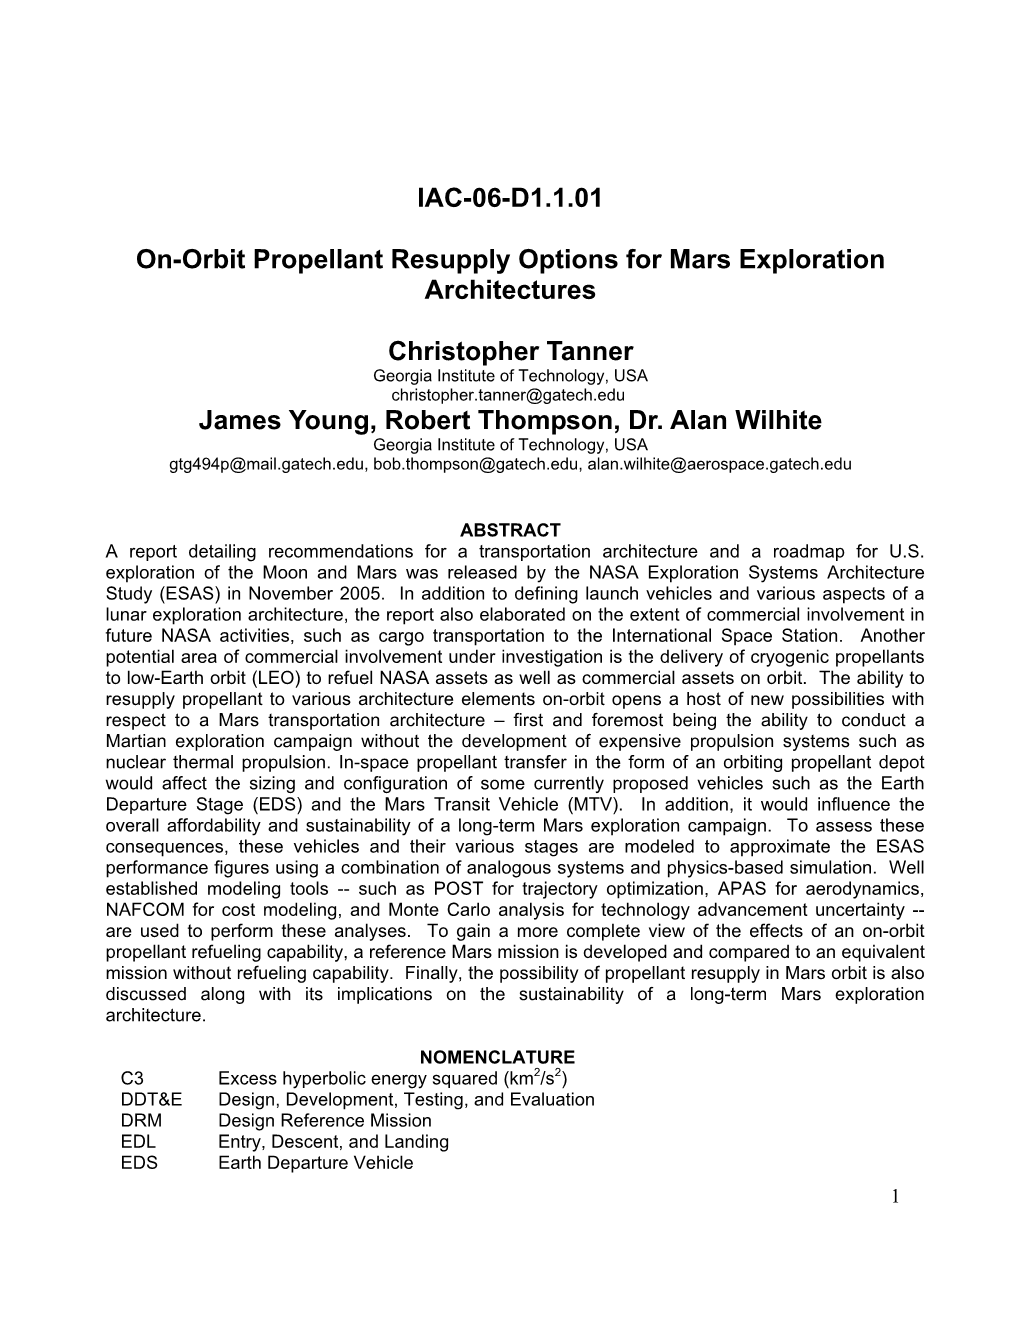 IAC-06-D1.1.01 On-Orbit Propellant Resupply Options for Mars